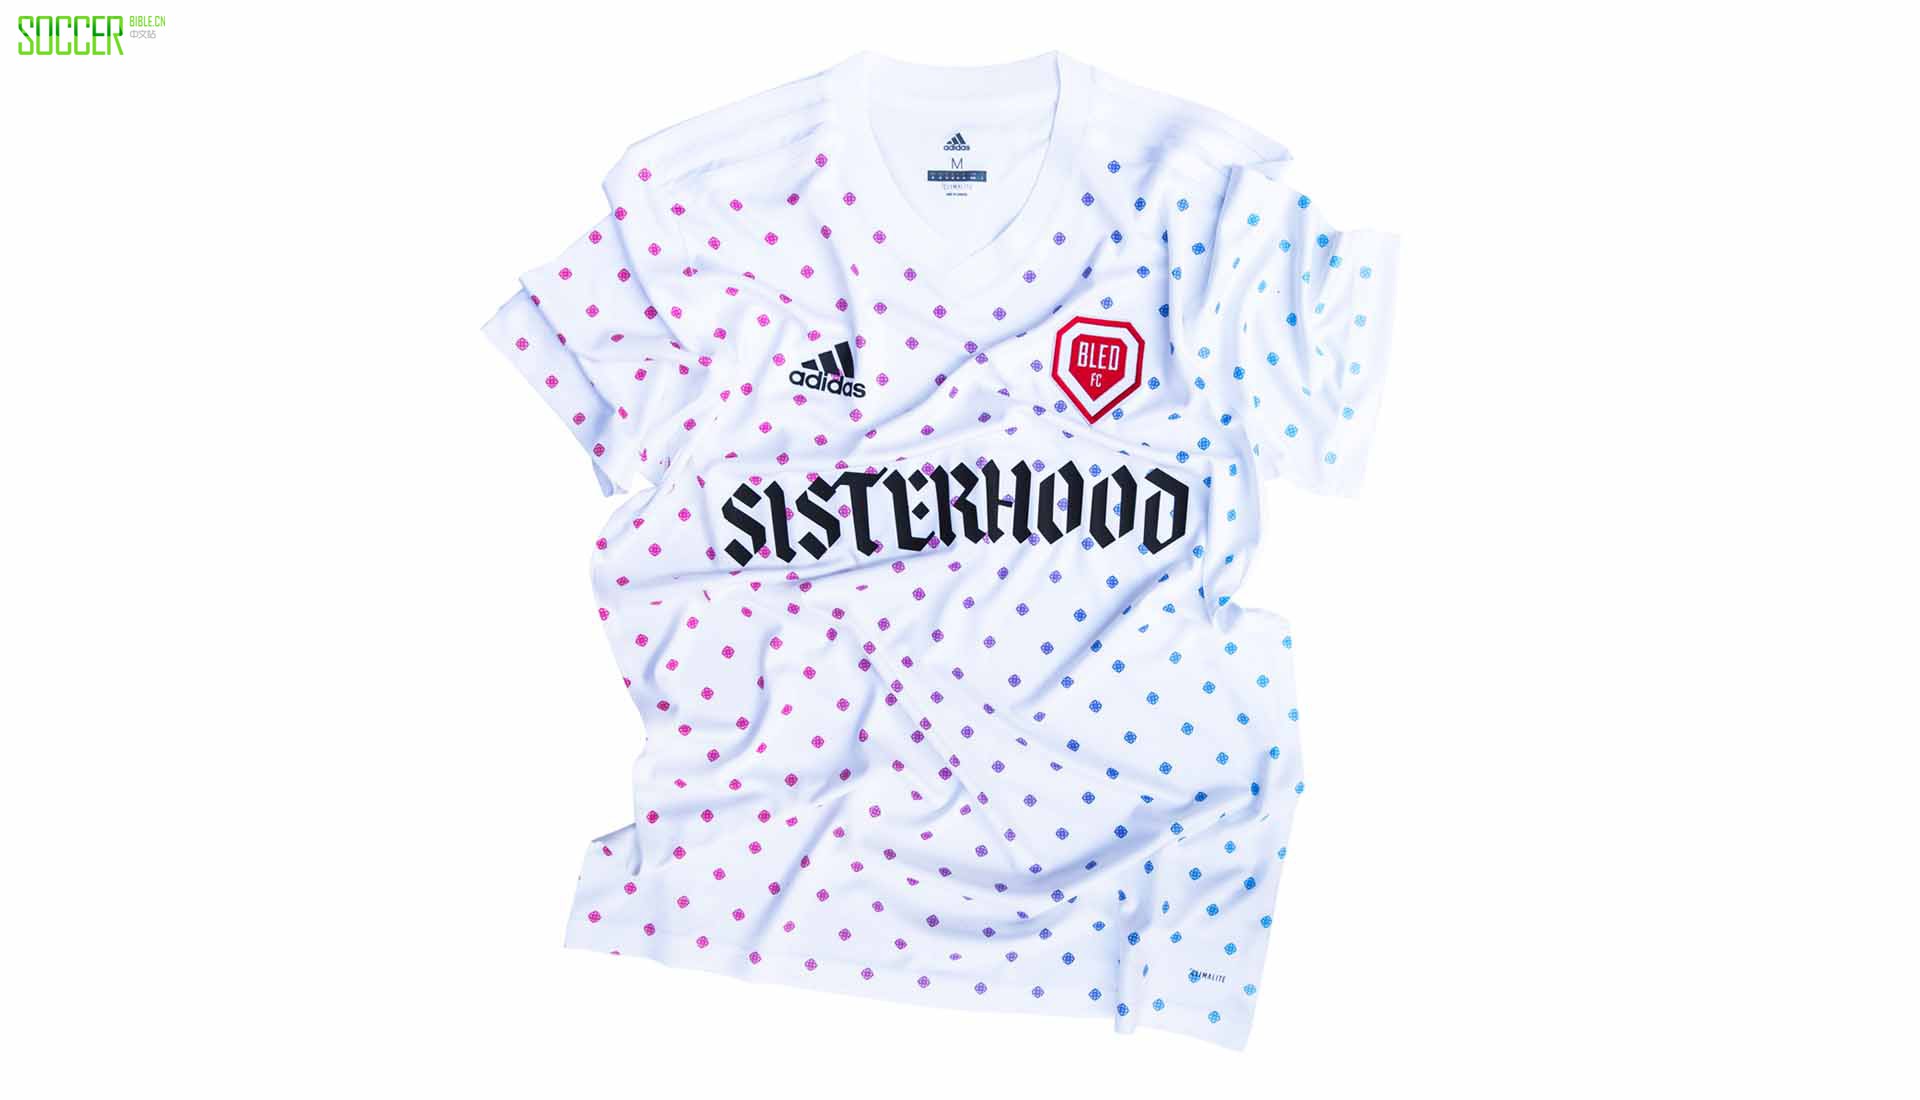 2-sister-hood-jersey